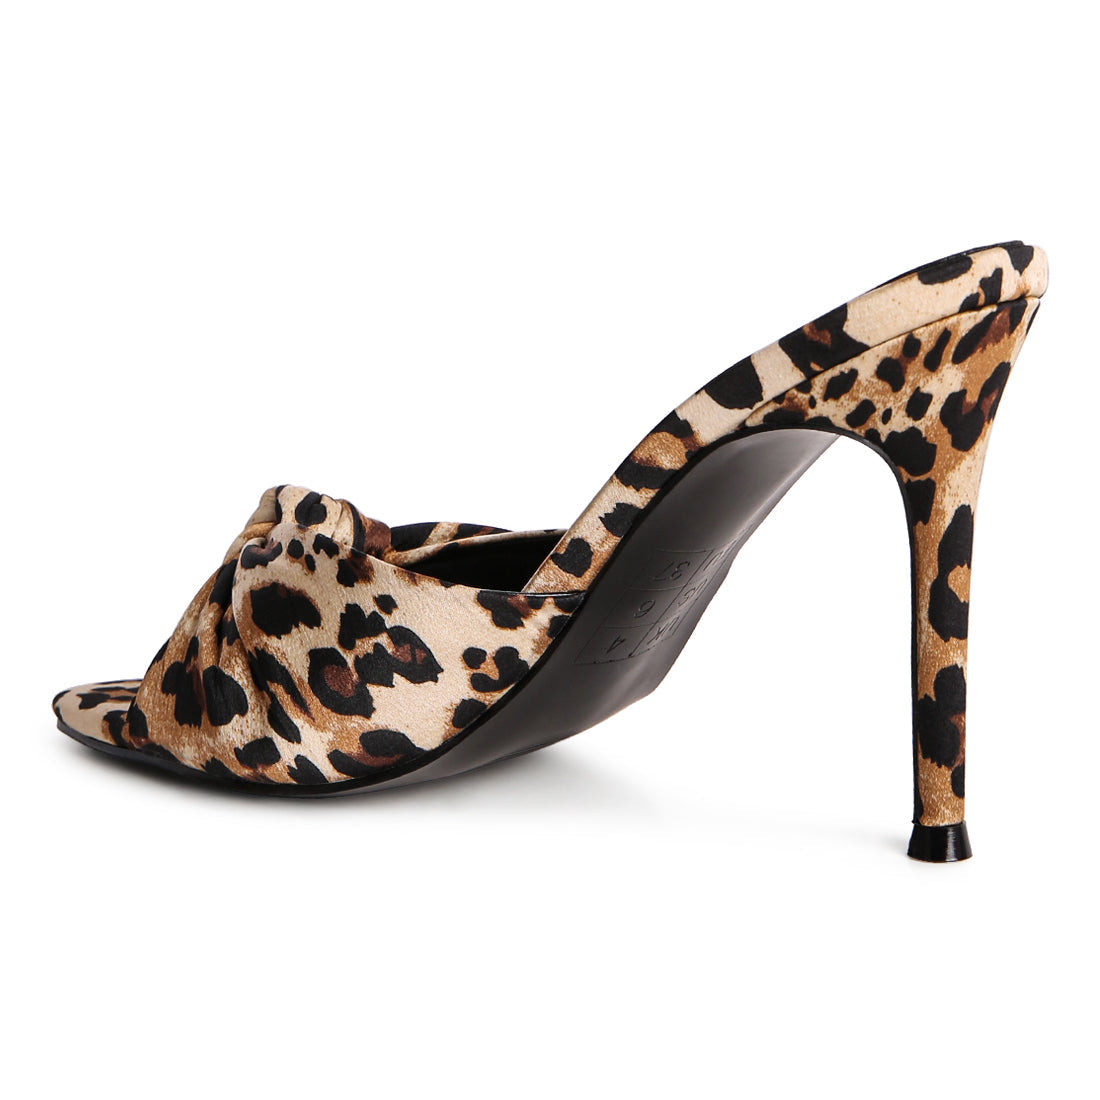 Satin Knot High Heeled Sandal in Leopard Print